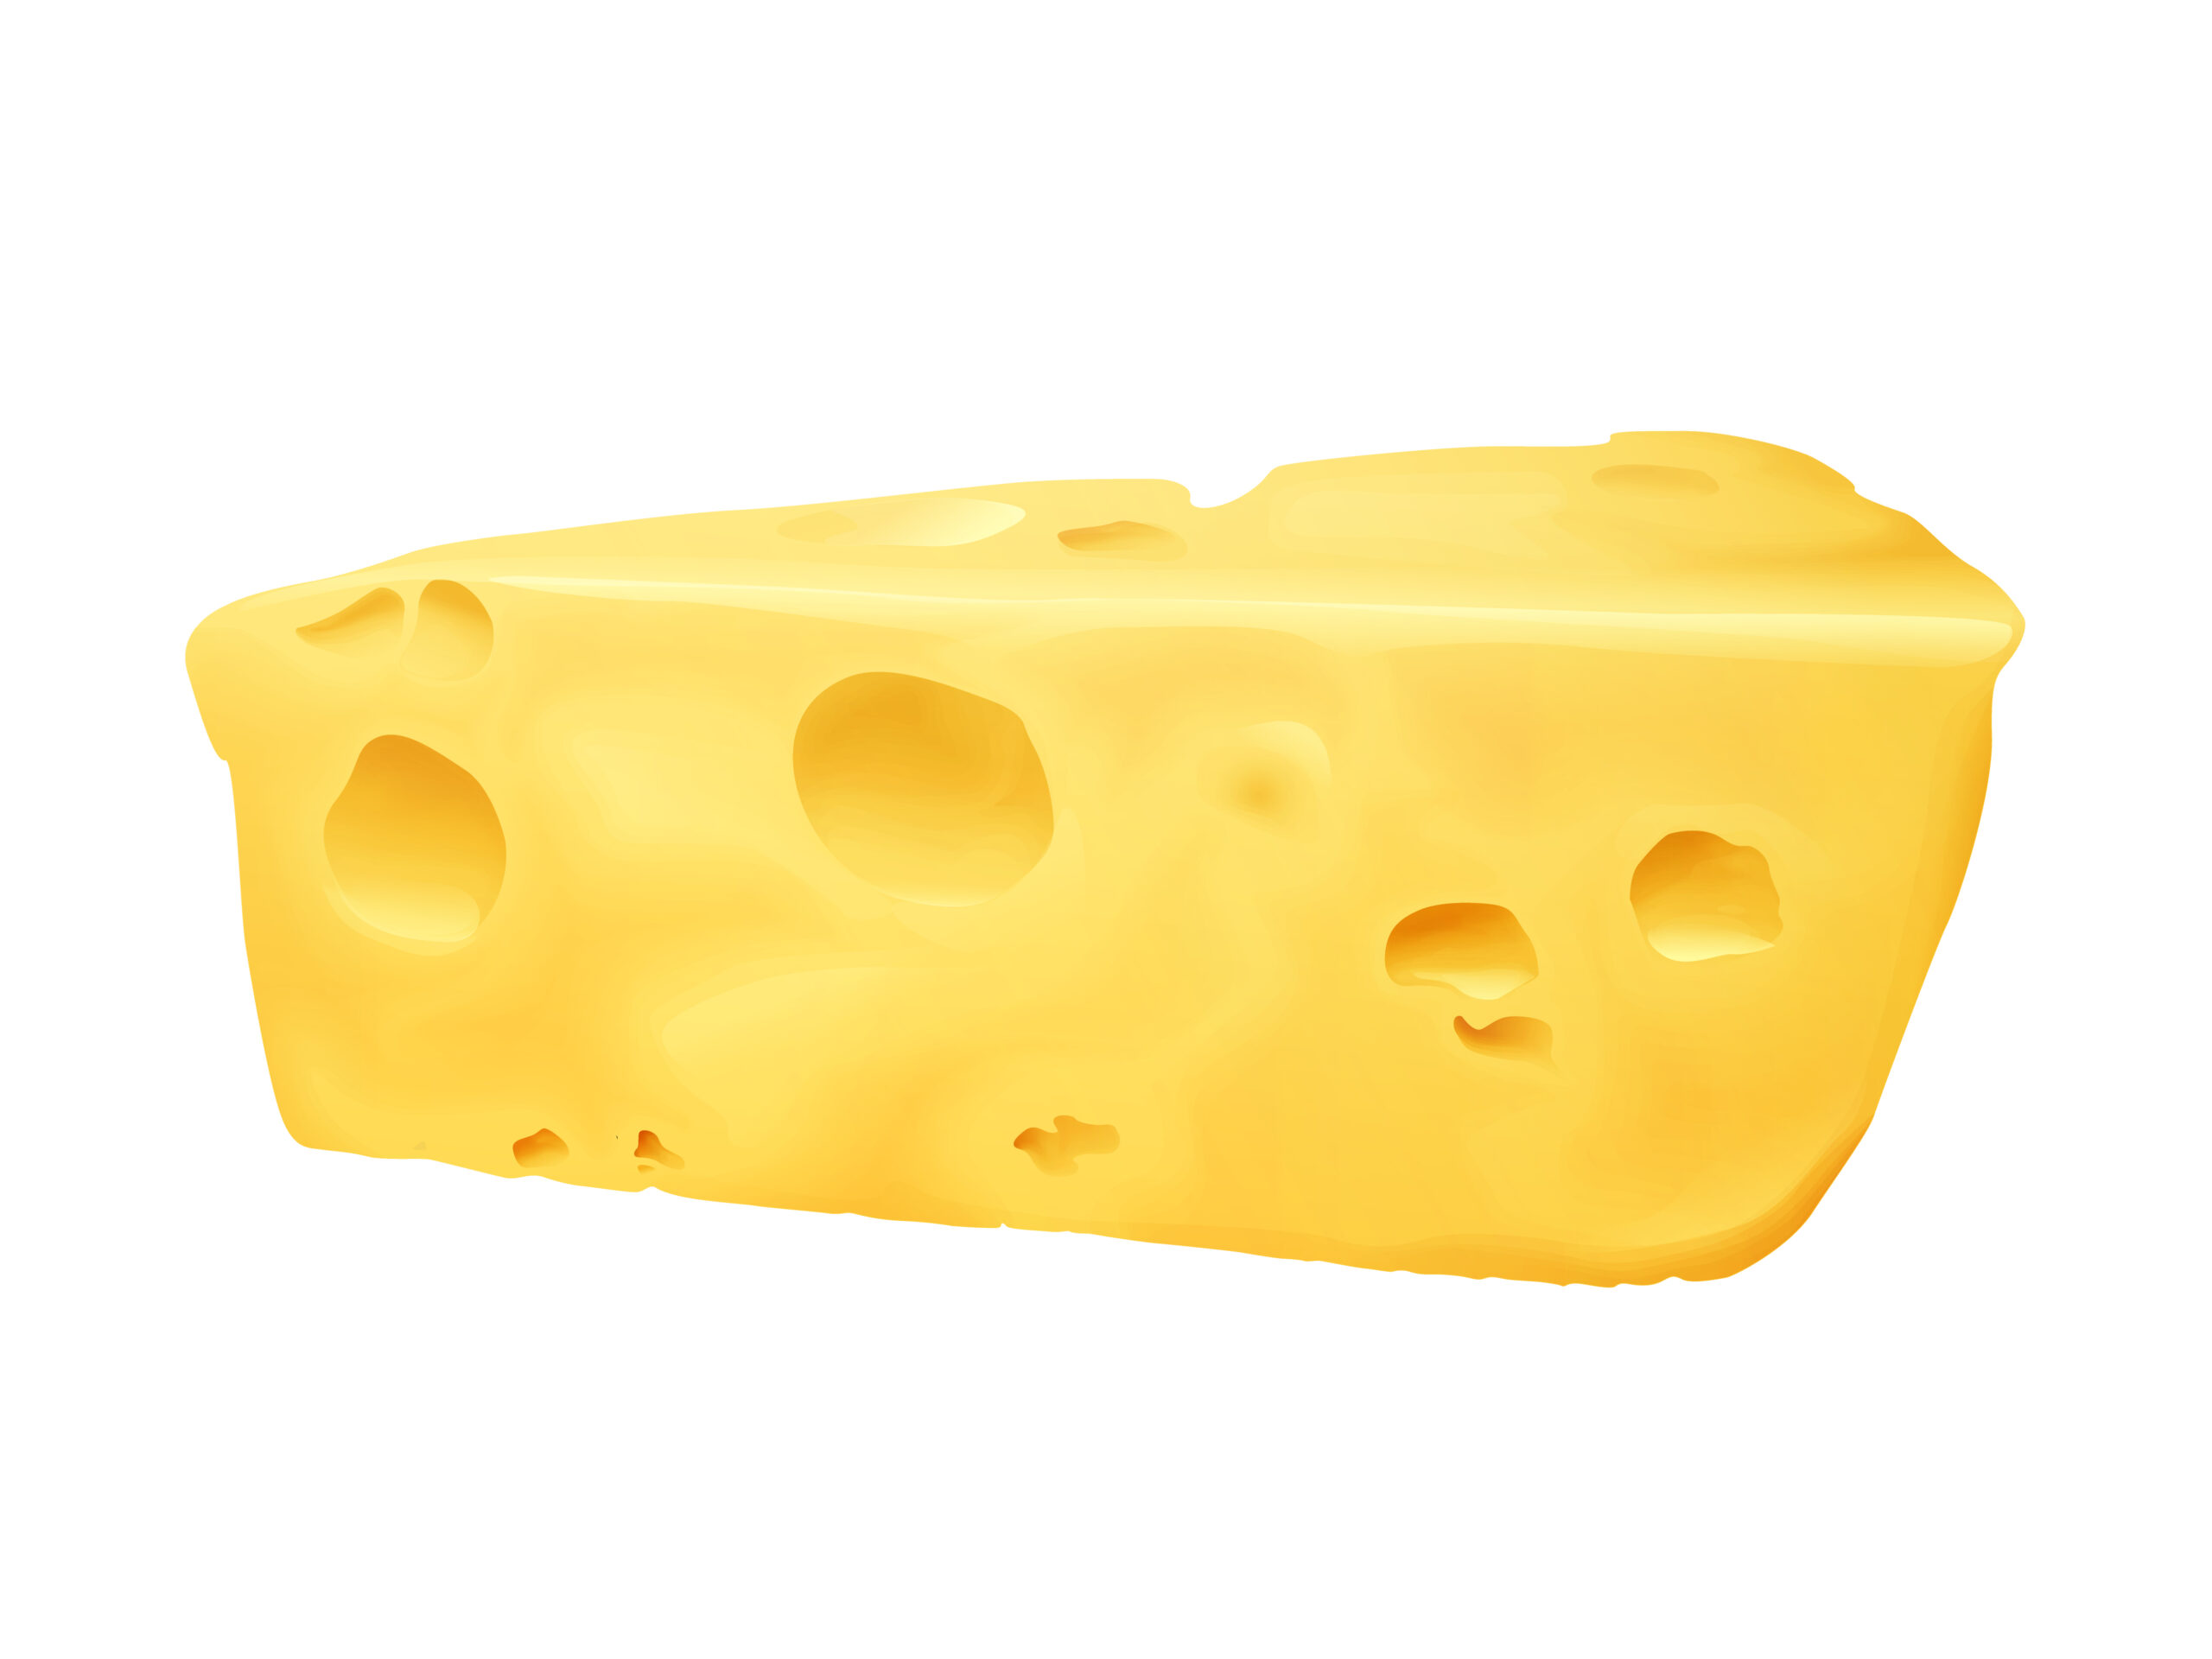 Cheese